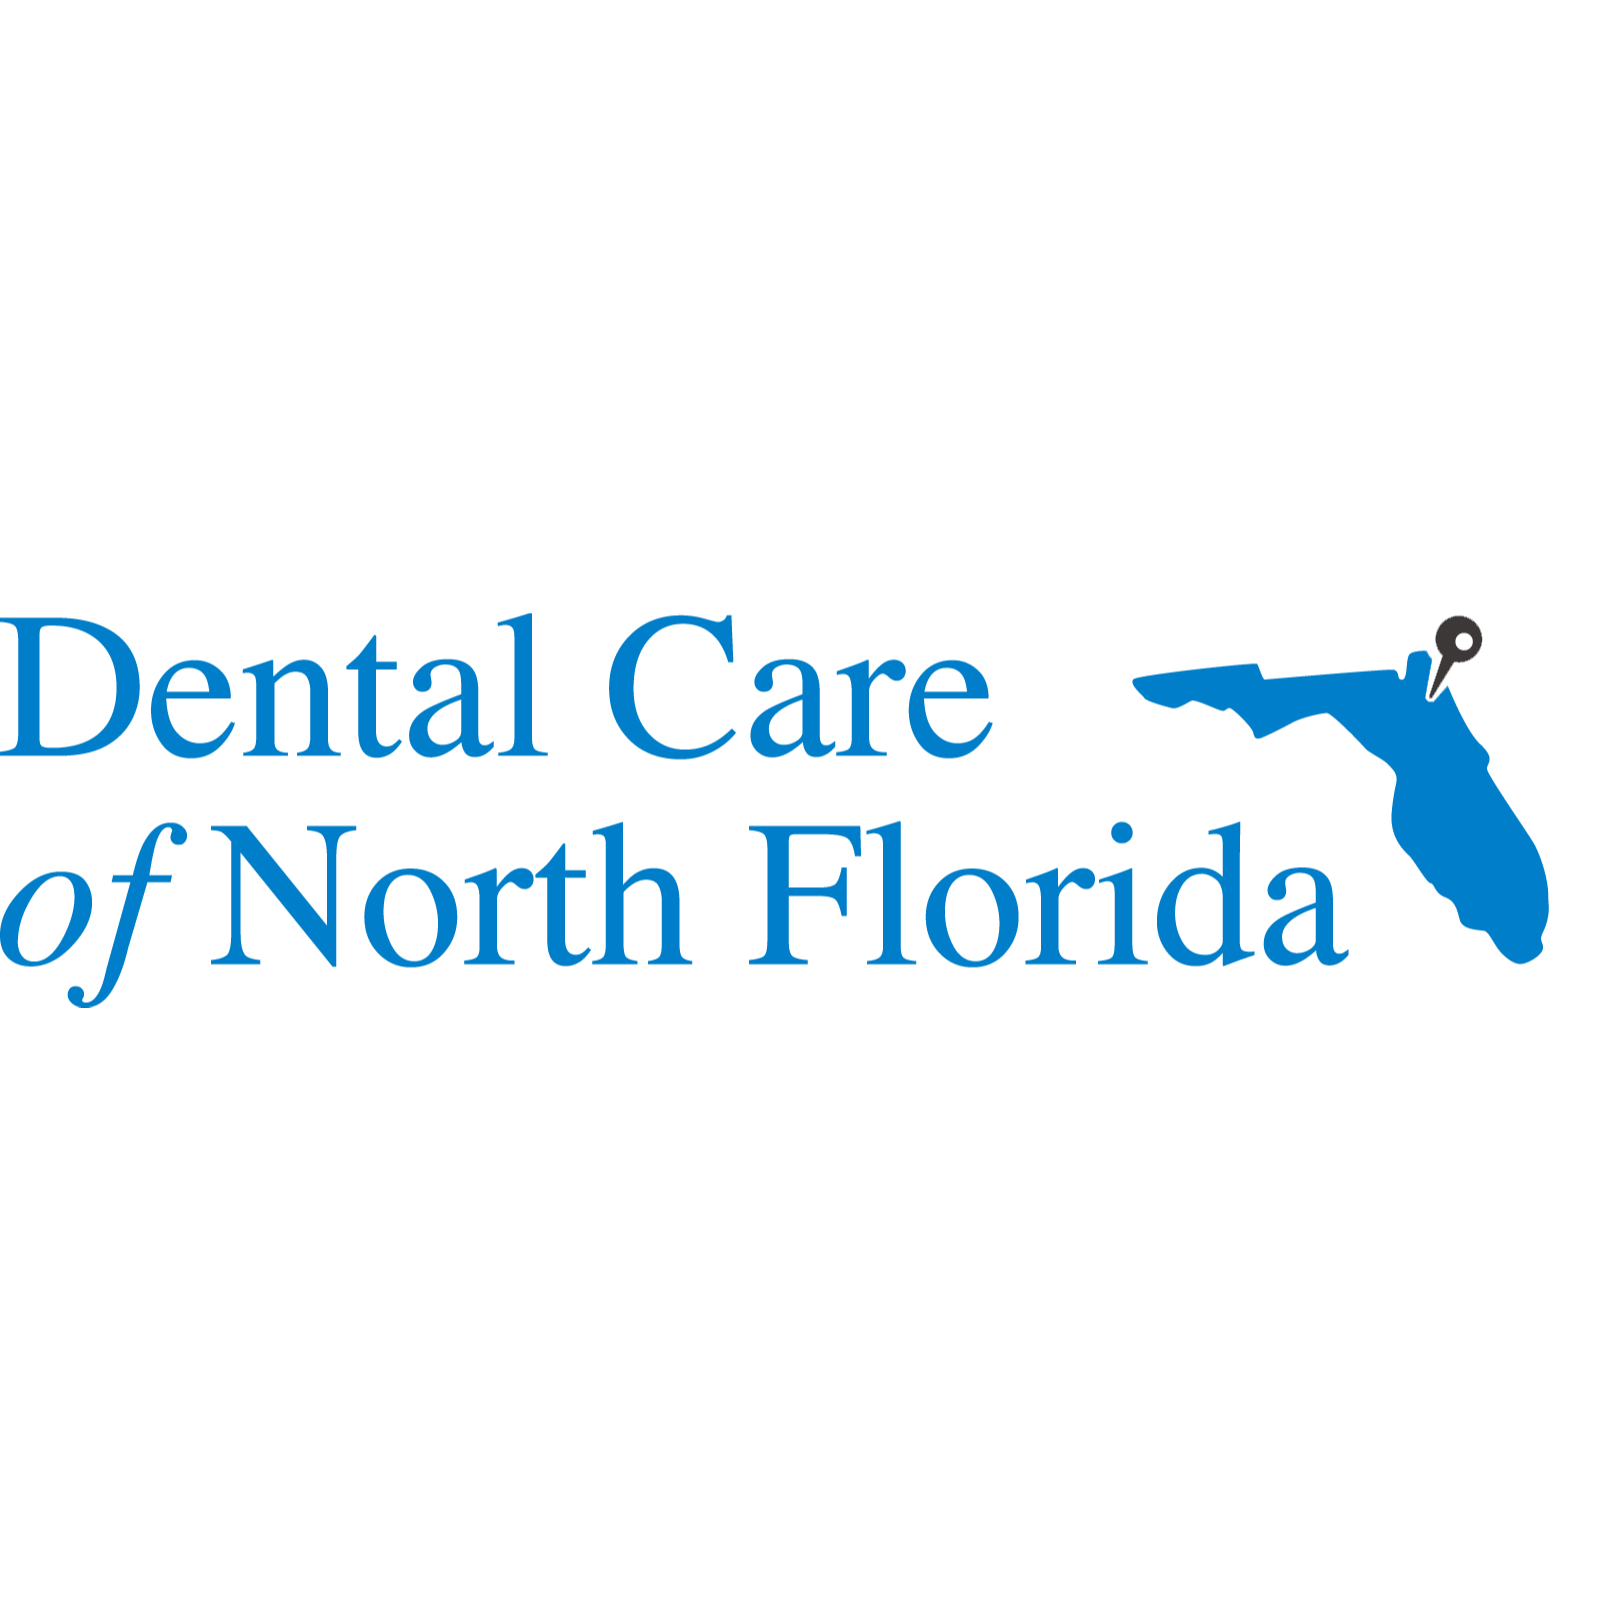 Dental Care of North Florida-Jacksonville Beach Blvd. - Jacksonville, FL 32250 - (904)821-8330 | ShowMeLocal.com